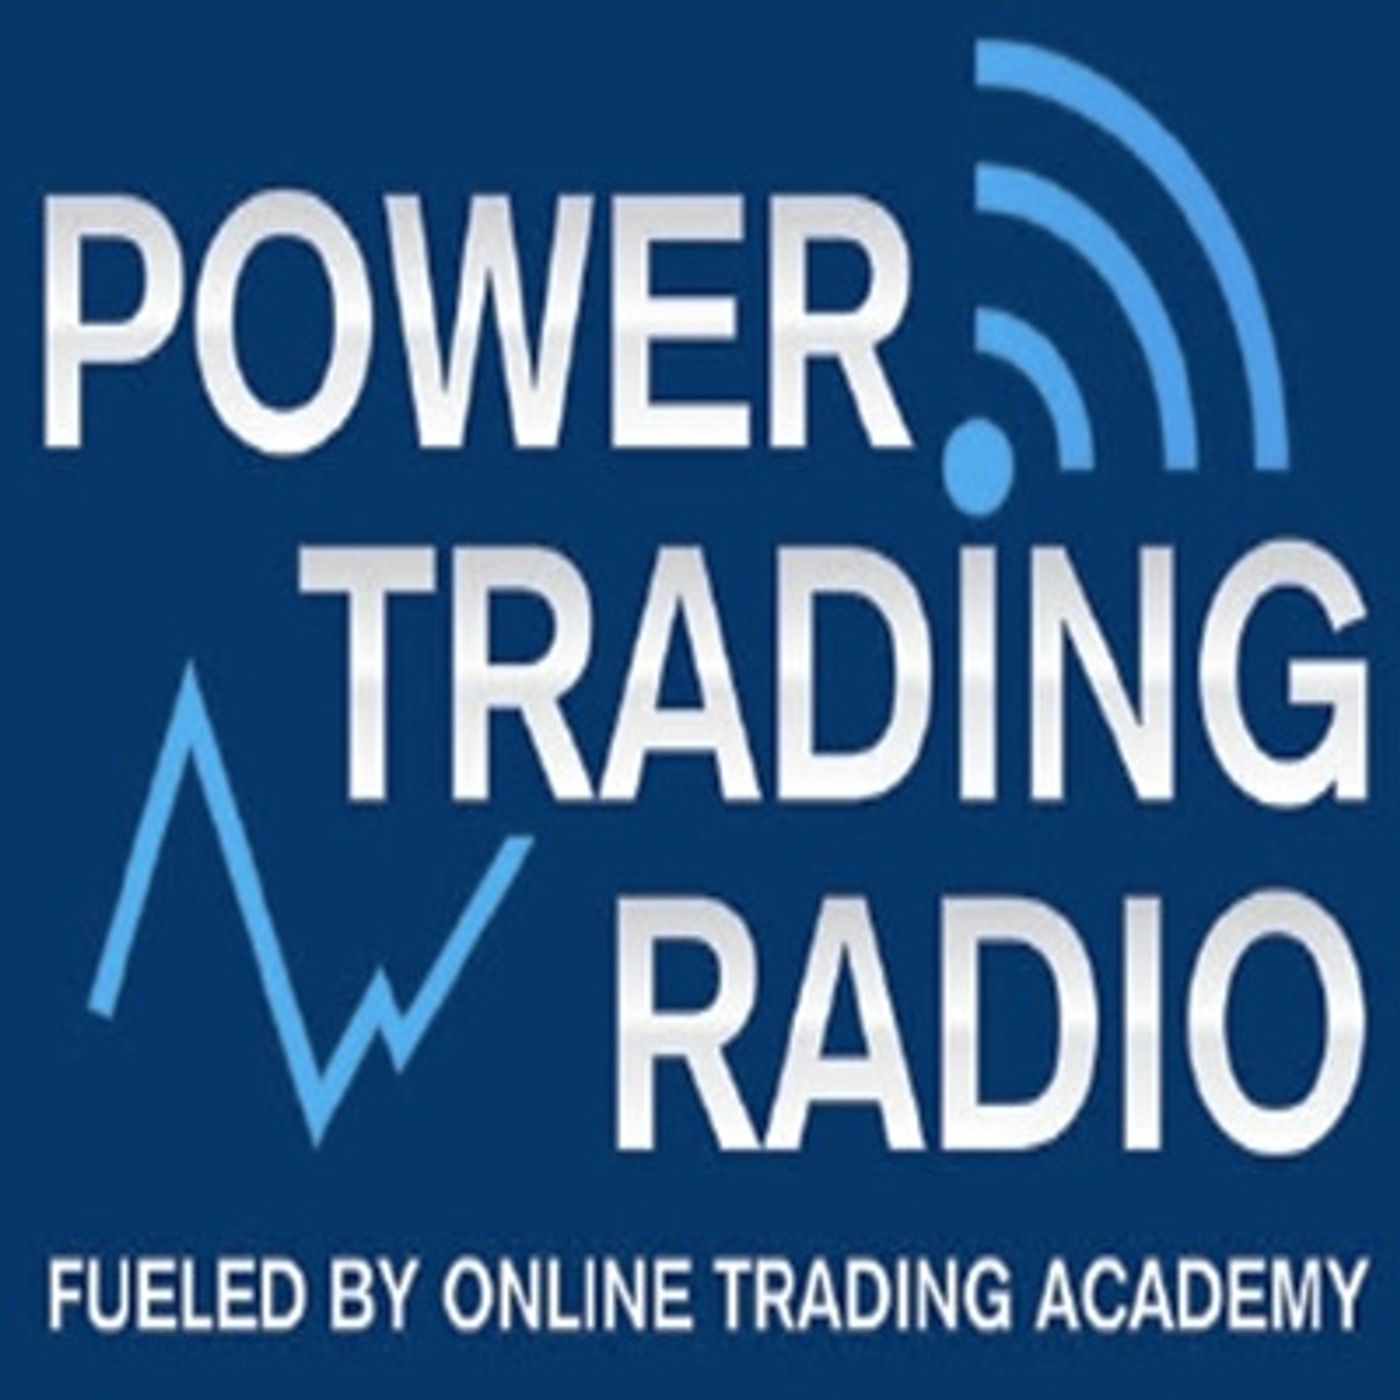 Power Trading Radio's tracks